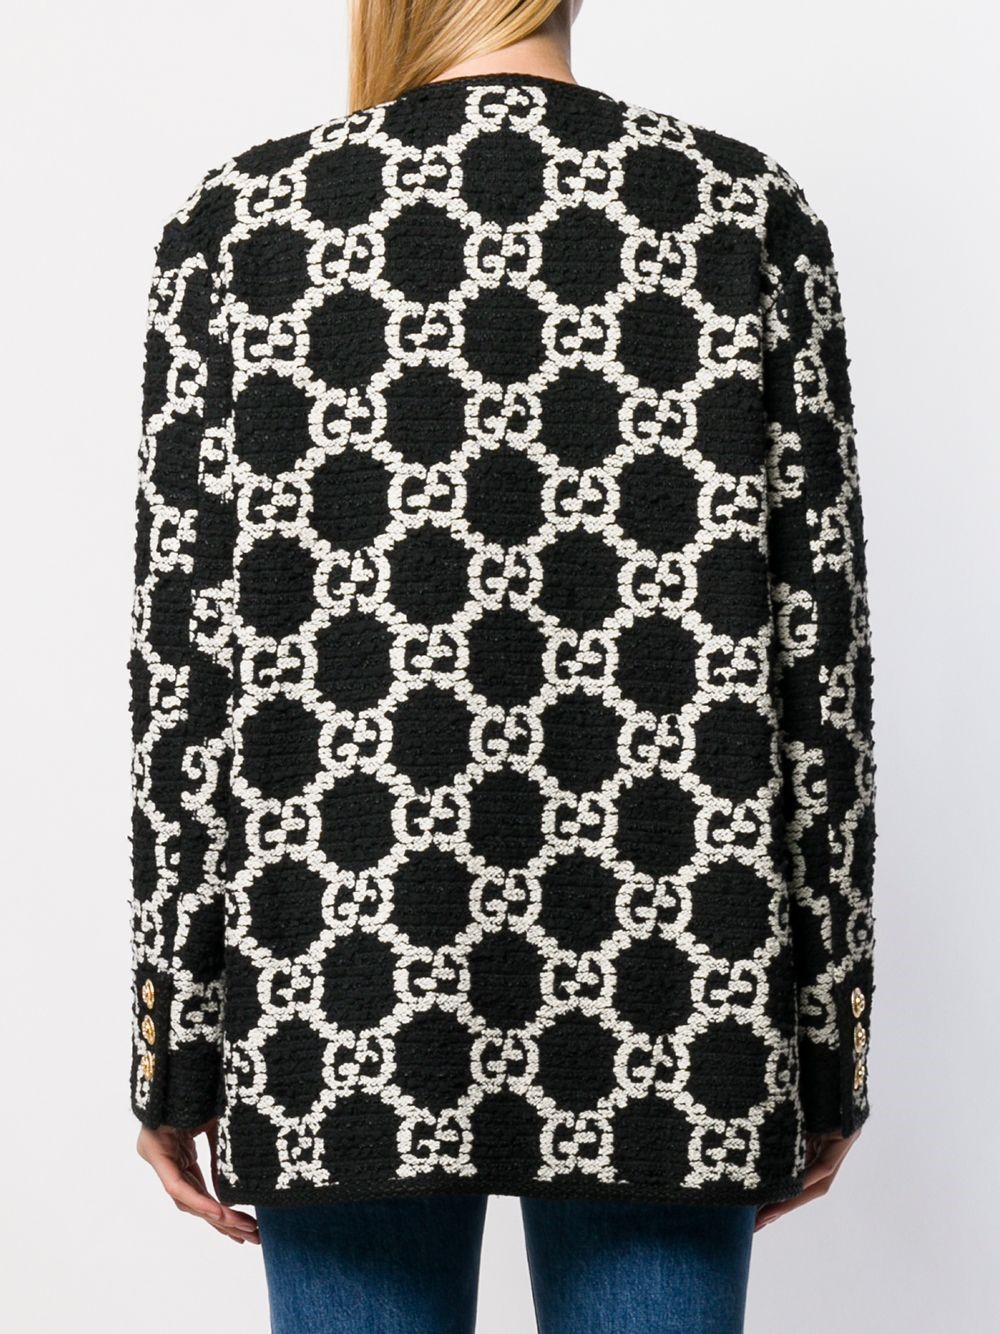 Newest \u003e gucci black and white sweater 